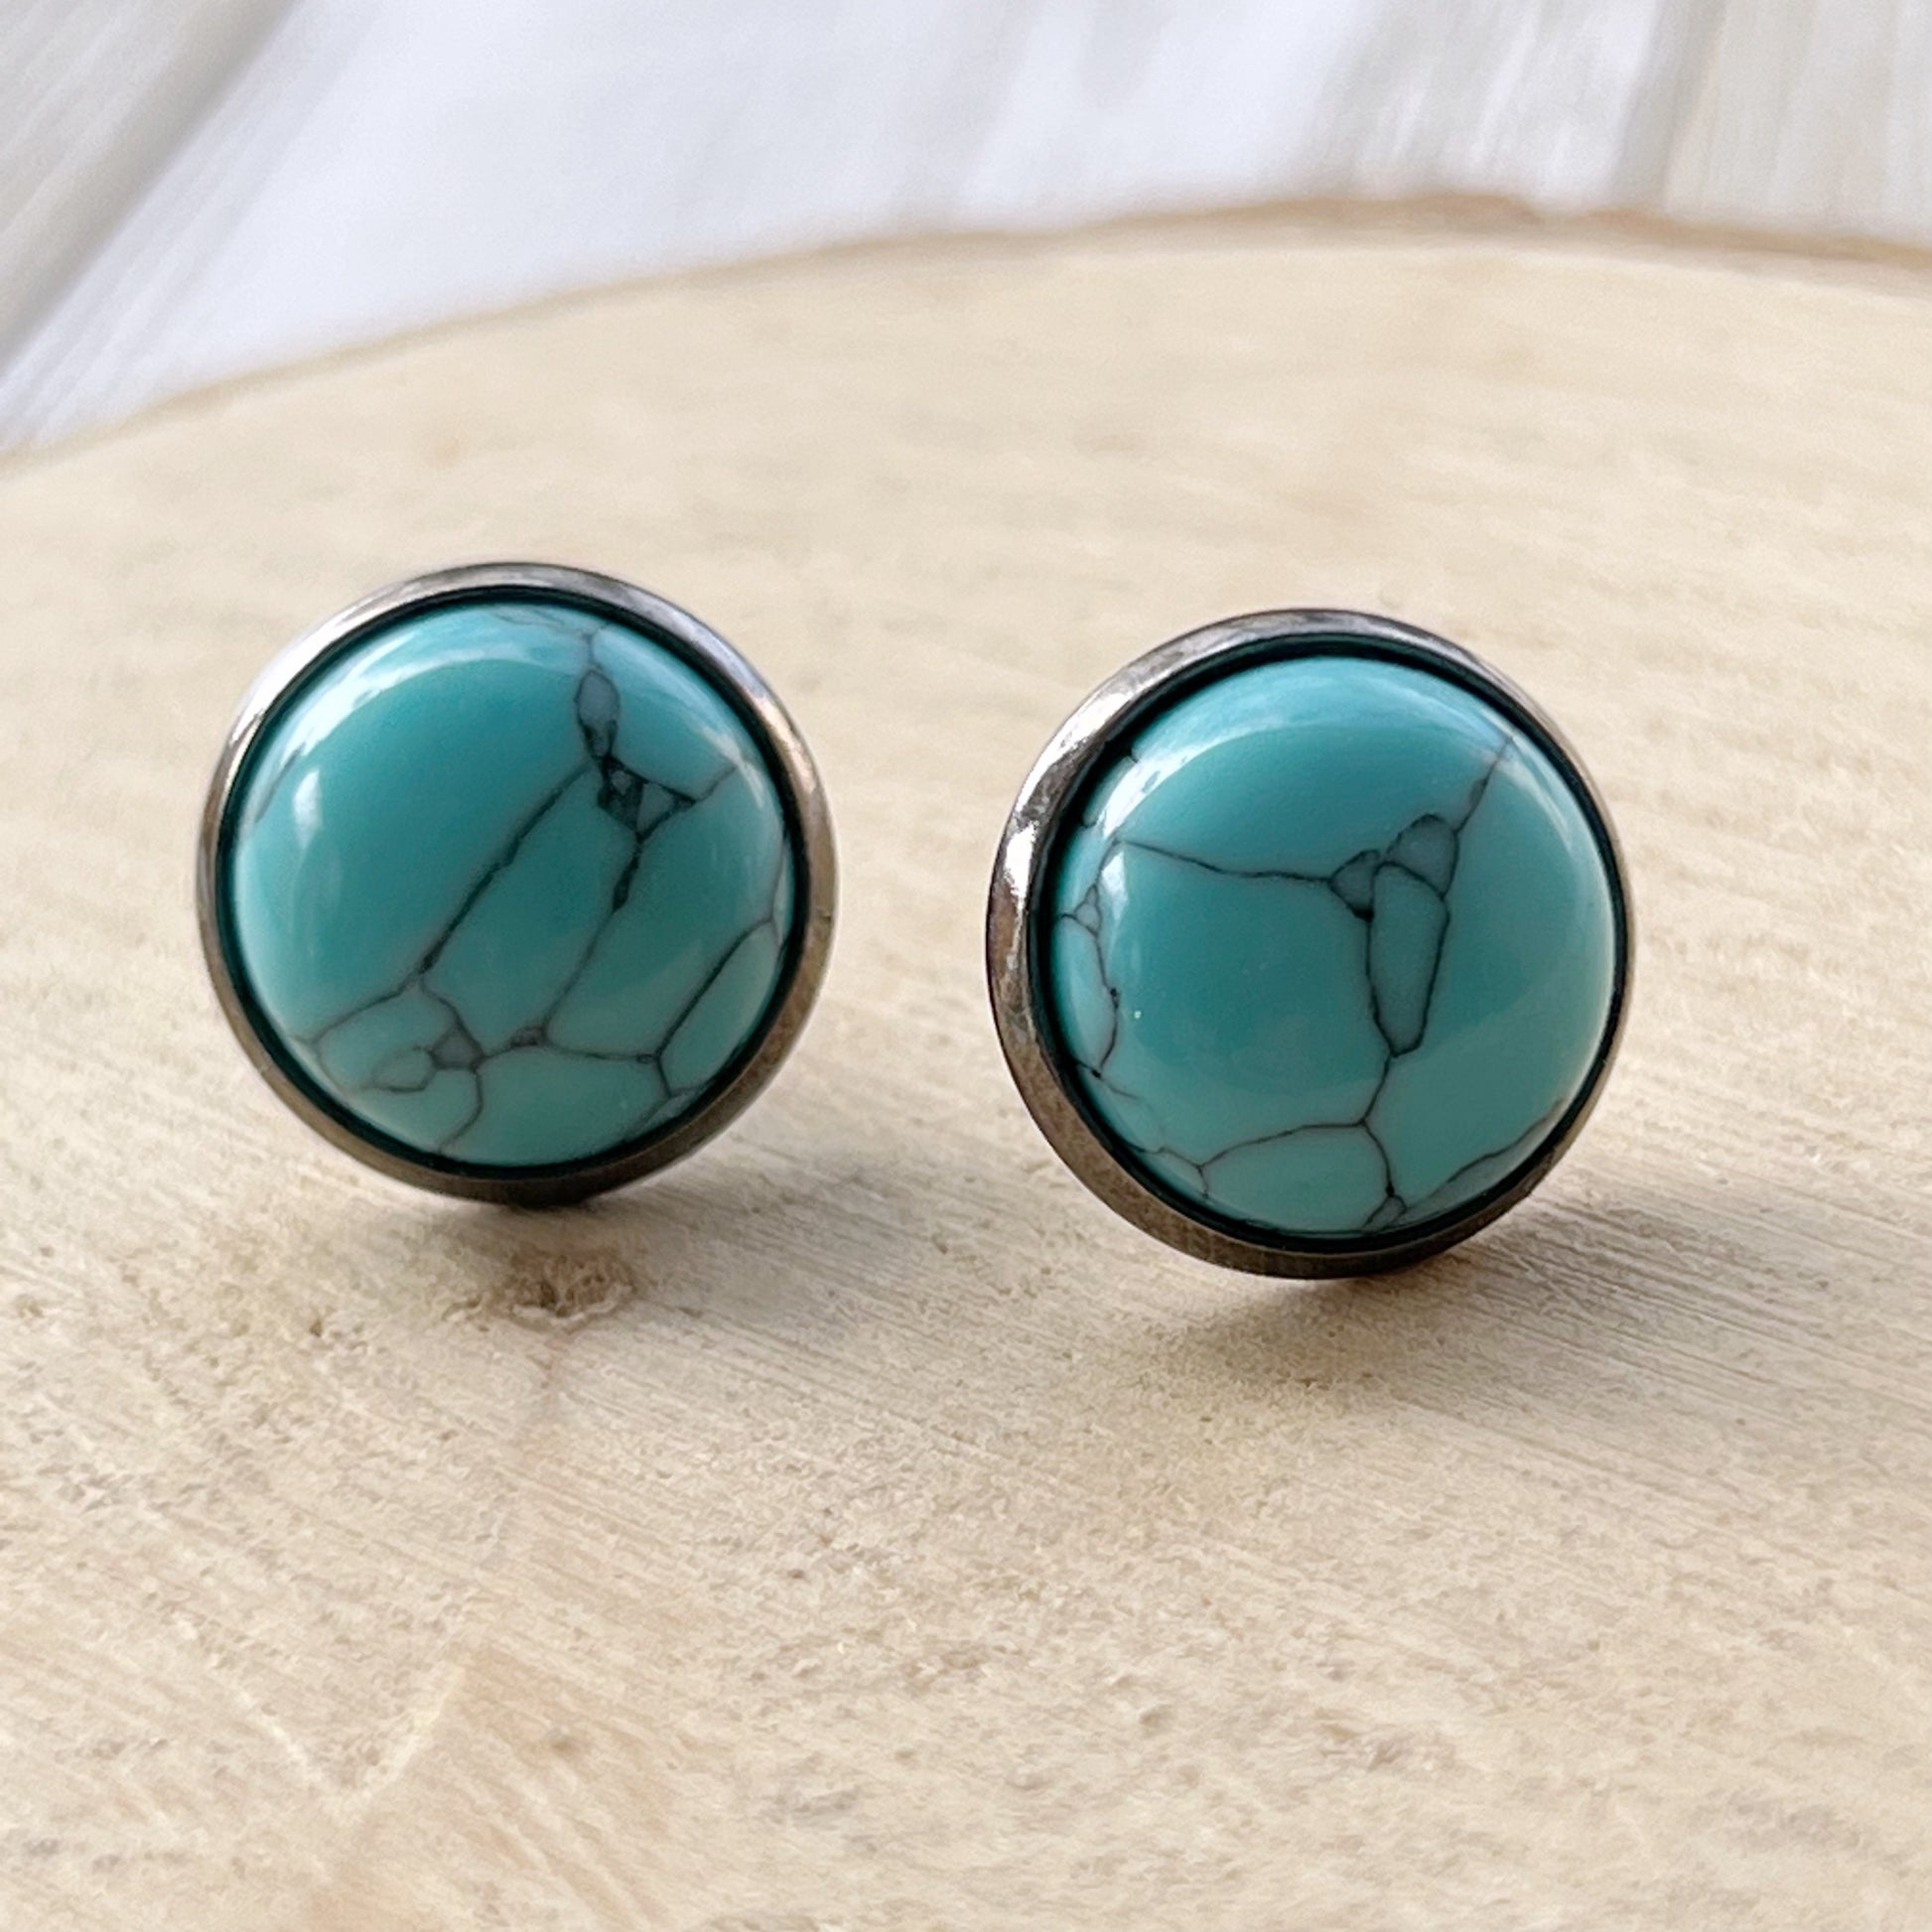 Turquoise 12mm Stud Earrings